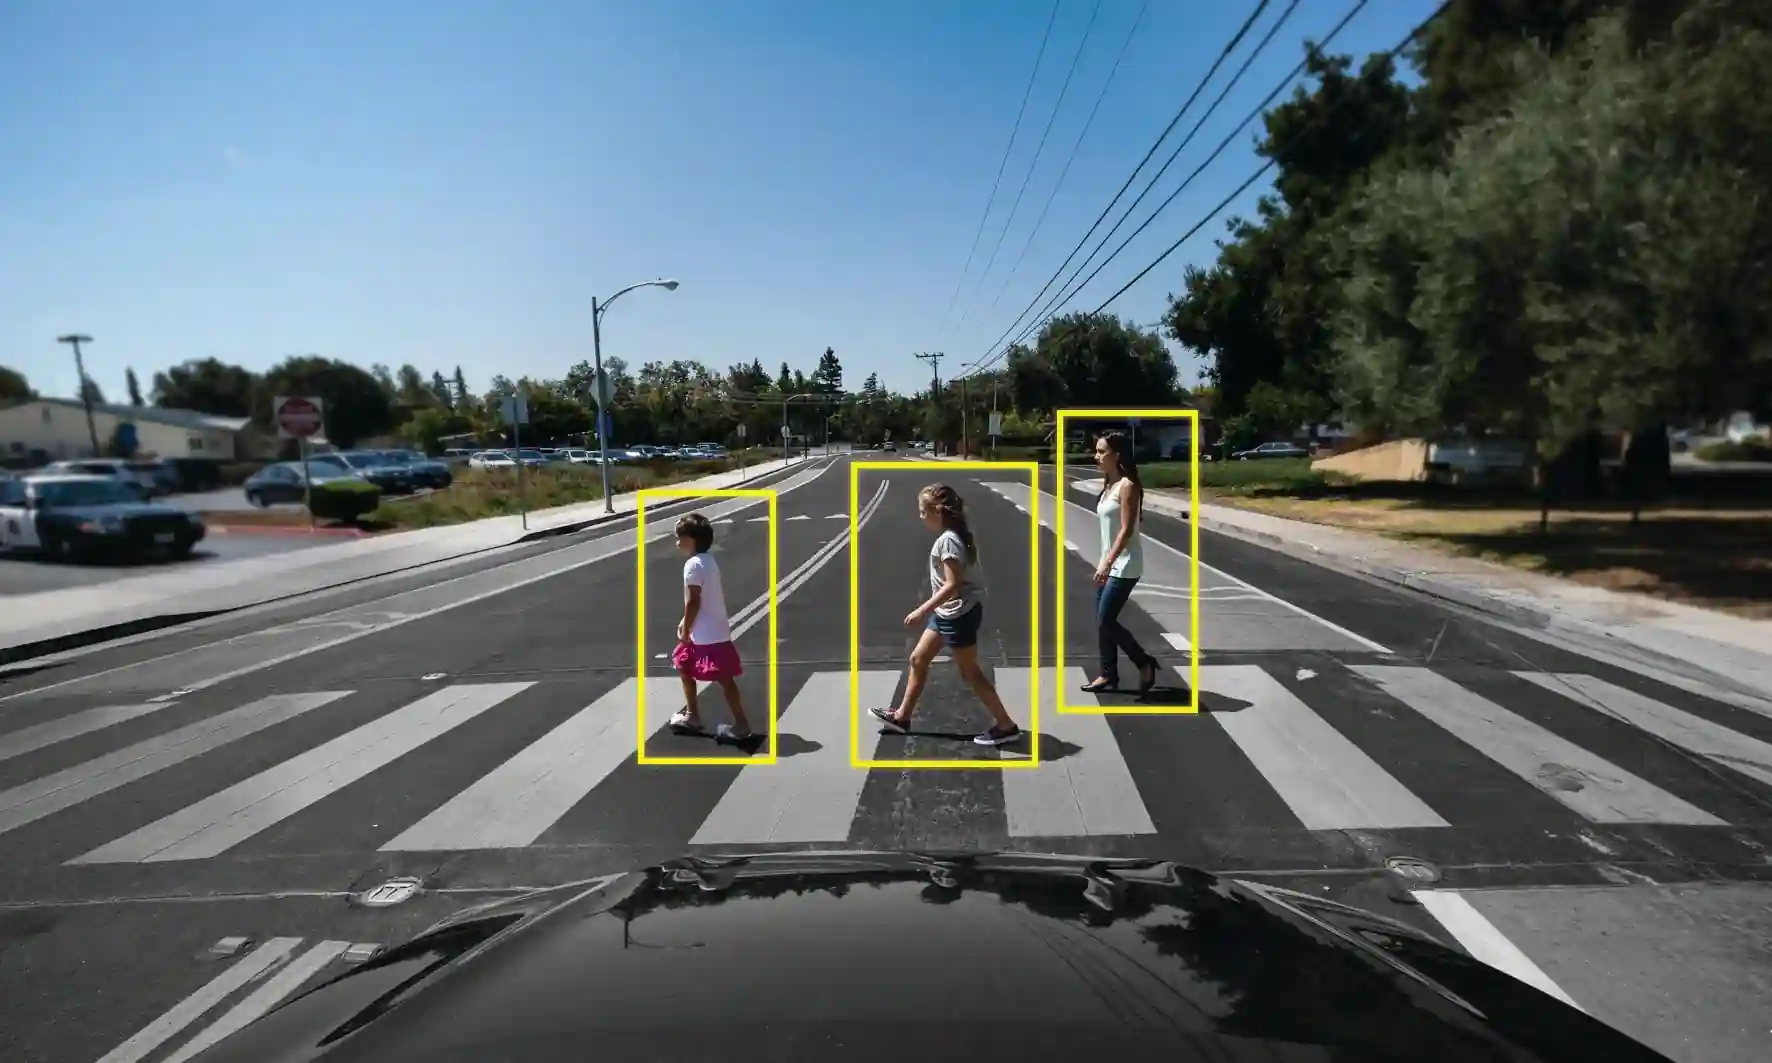 Why do Autonomous Vehicles Need Object Detection?